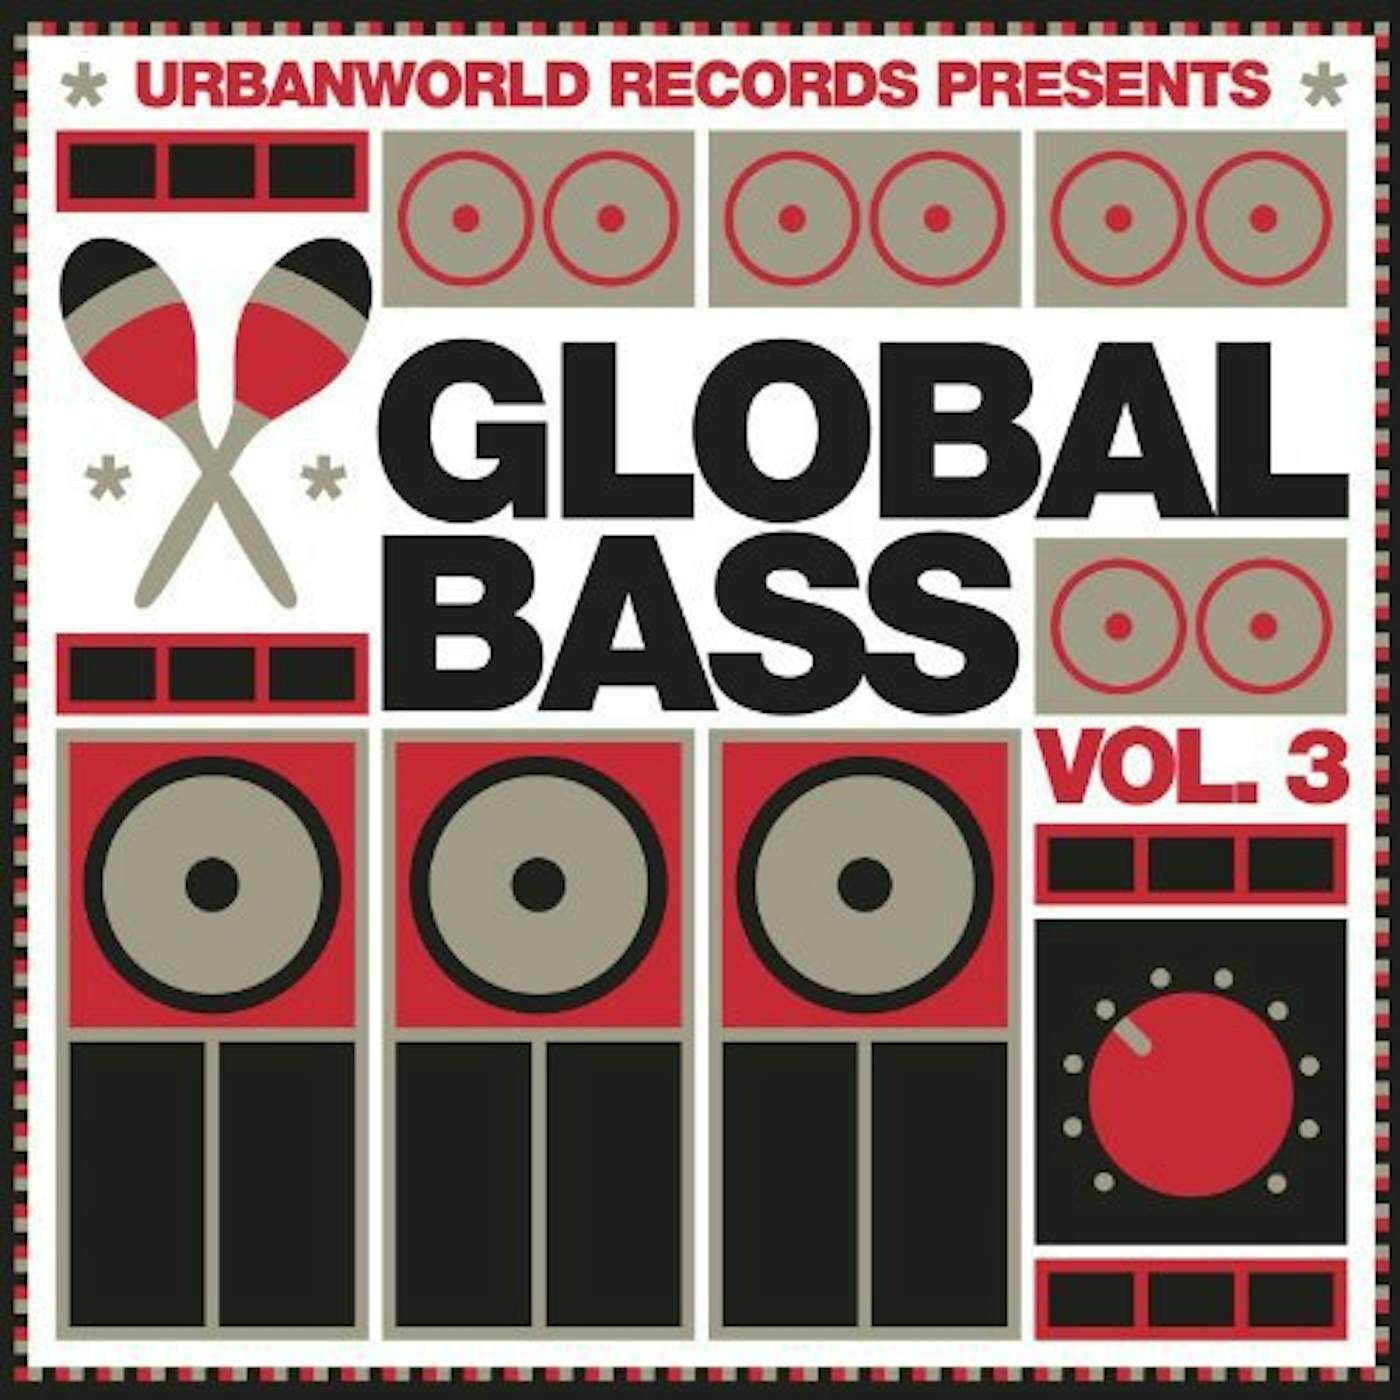 VOL. 3-GLOBAL BASS / VARIOUS Vinyl Record - UK Release